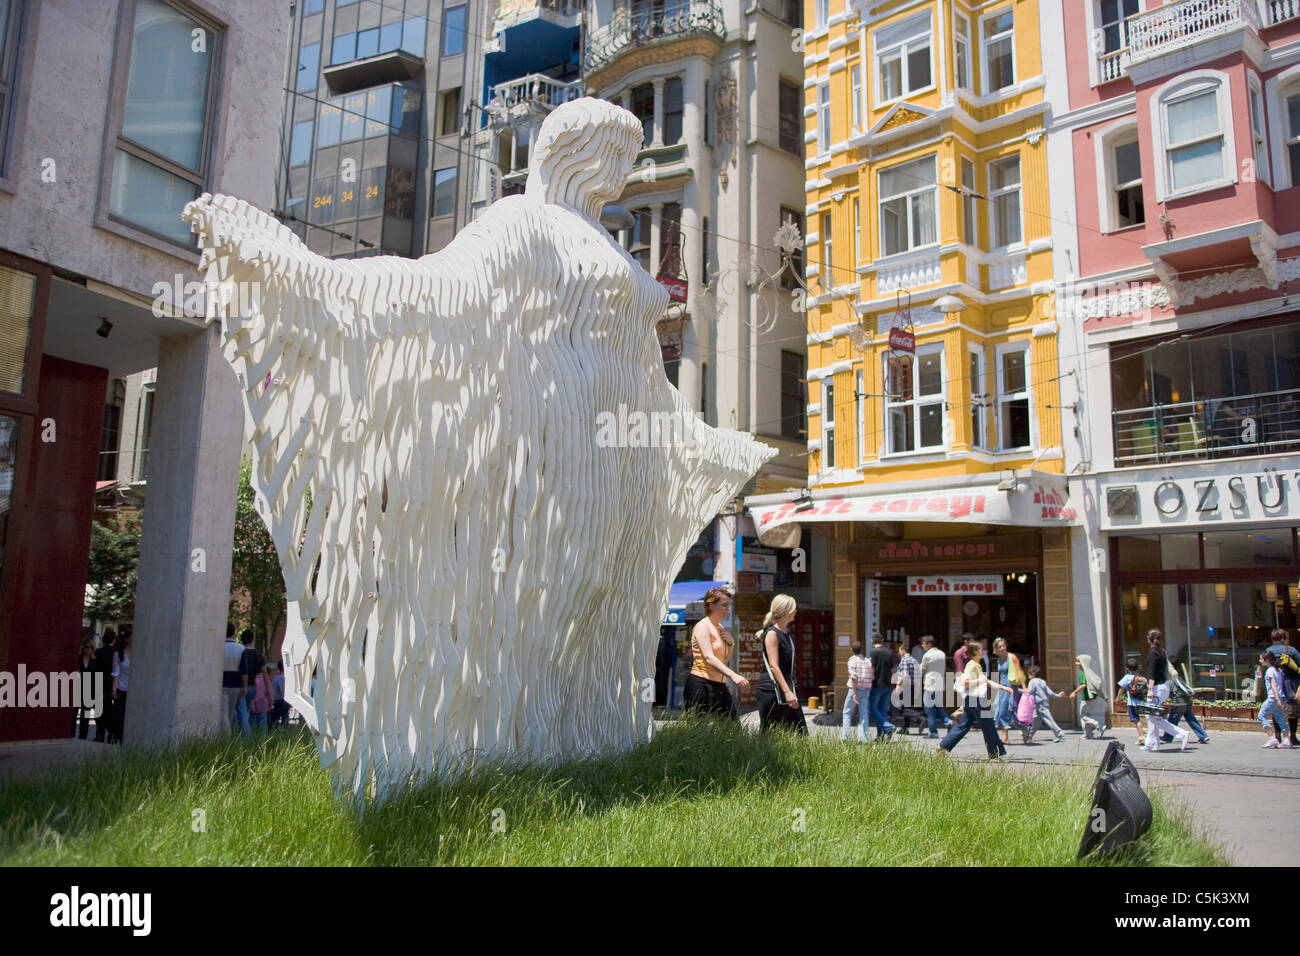 Akdeniz sculpture by Ilhan Koman in Galatasaray on Istiklal Avenue, Beyoglu, Istanbul - 2010 European Capital of Culture - Stock Photo